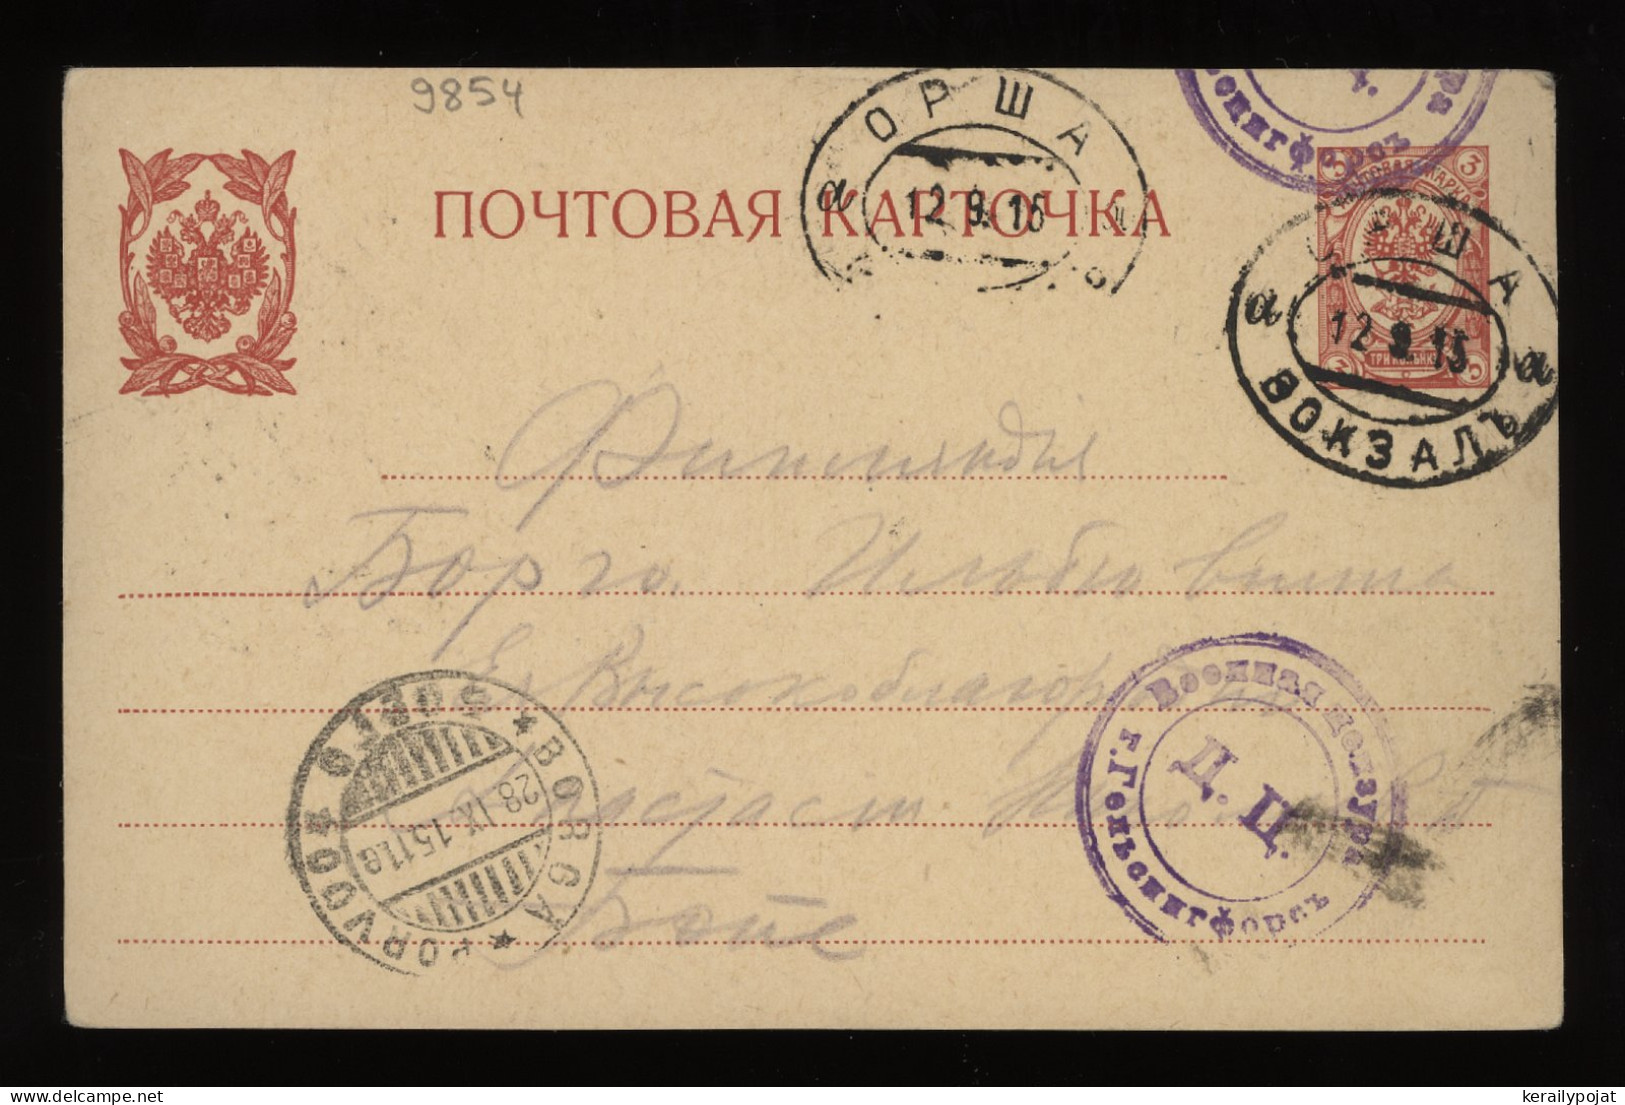 Russia 1915 3k Red Stationery Card To Finland__(9854) - Interi Postali